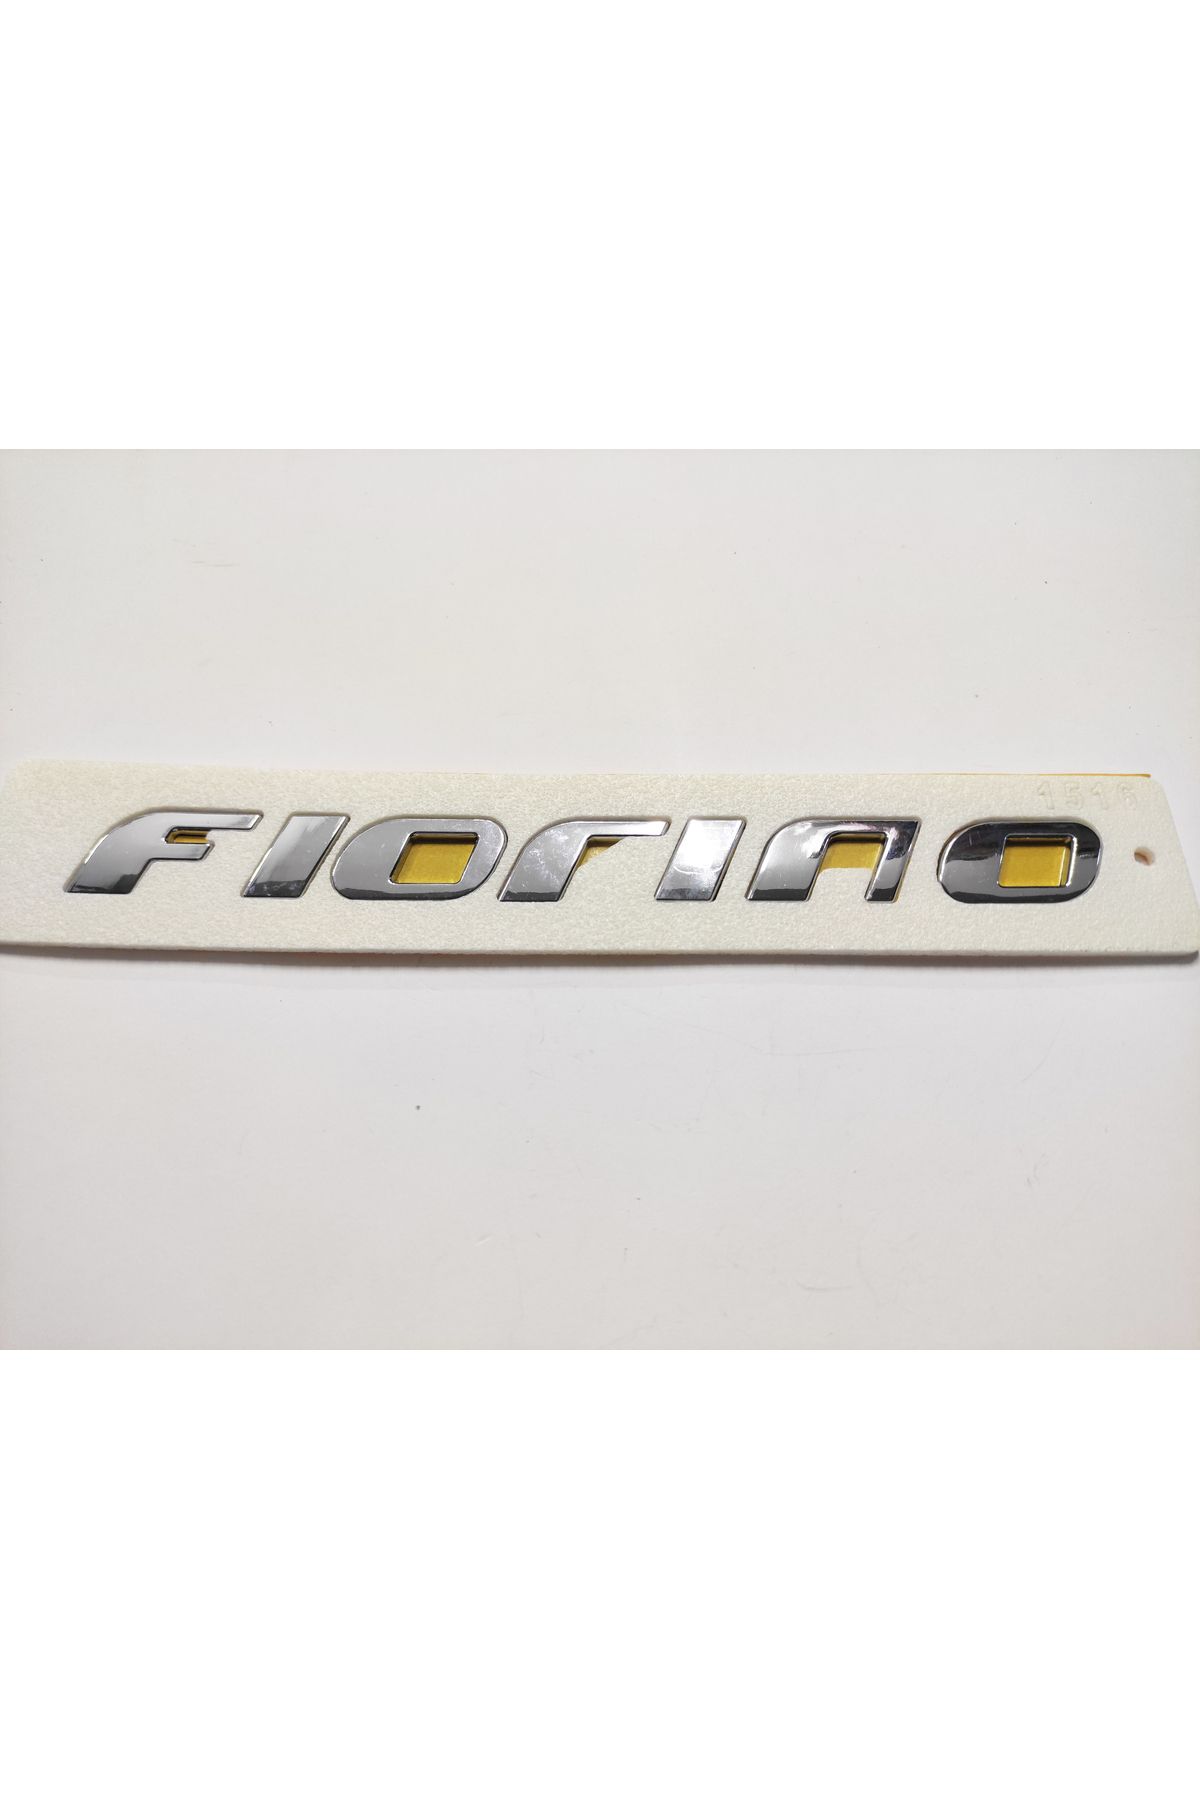 REPLAX Fiat Fiorino Arma Bagaj Yazısı (E.M.) Yapıştırma 25cmx2.5cm 1516